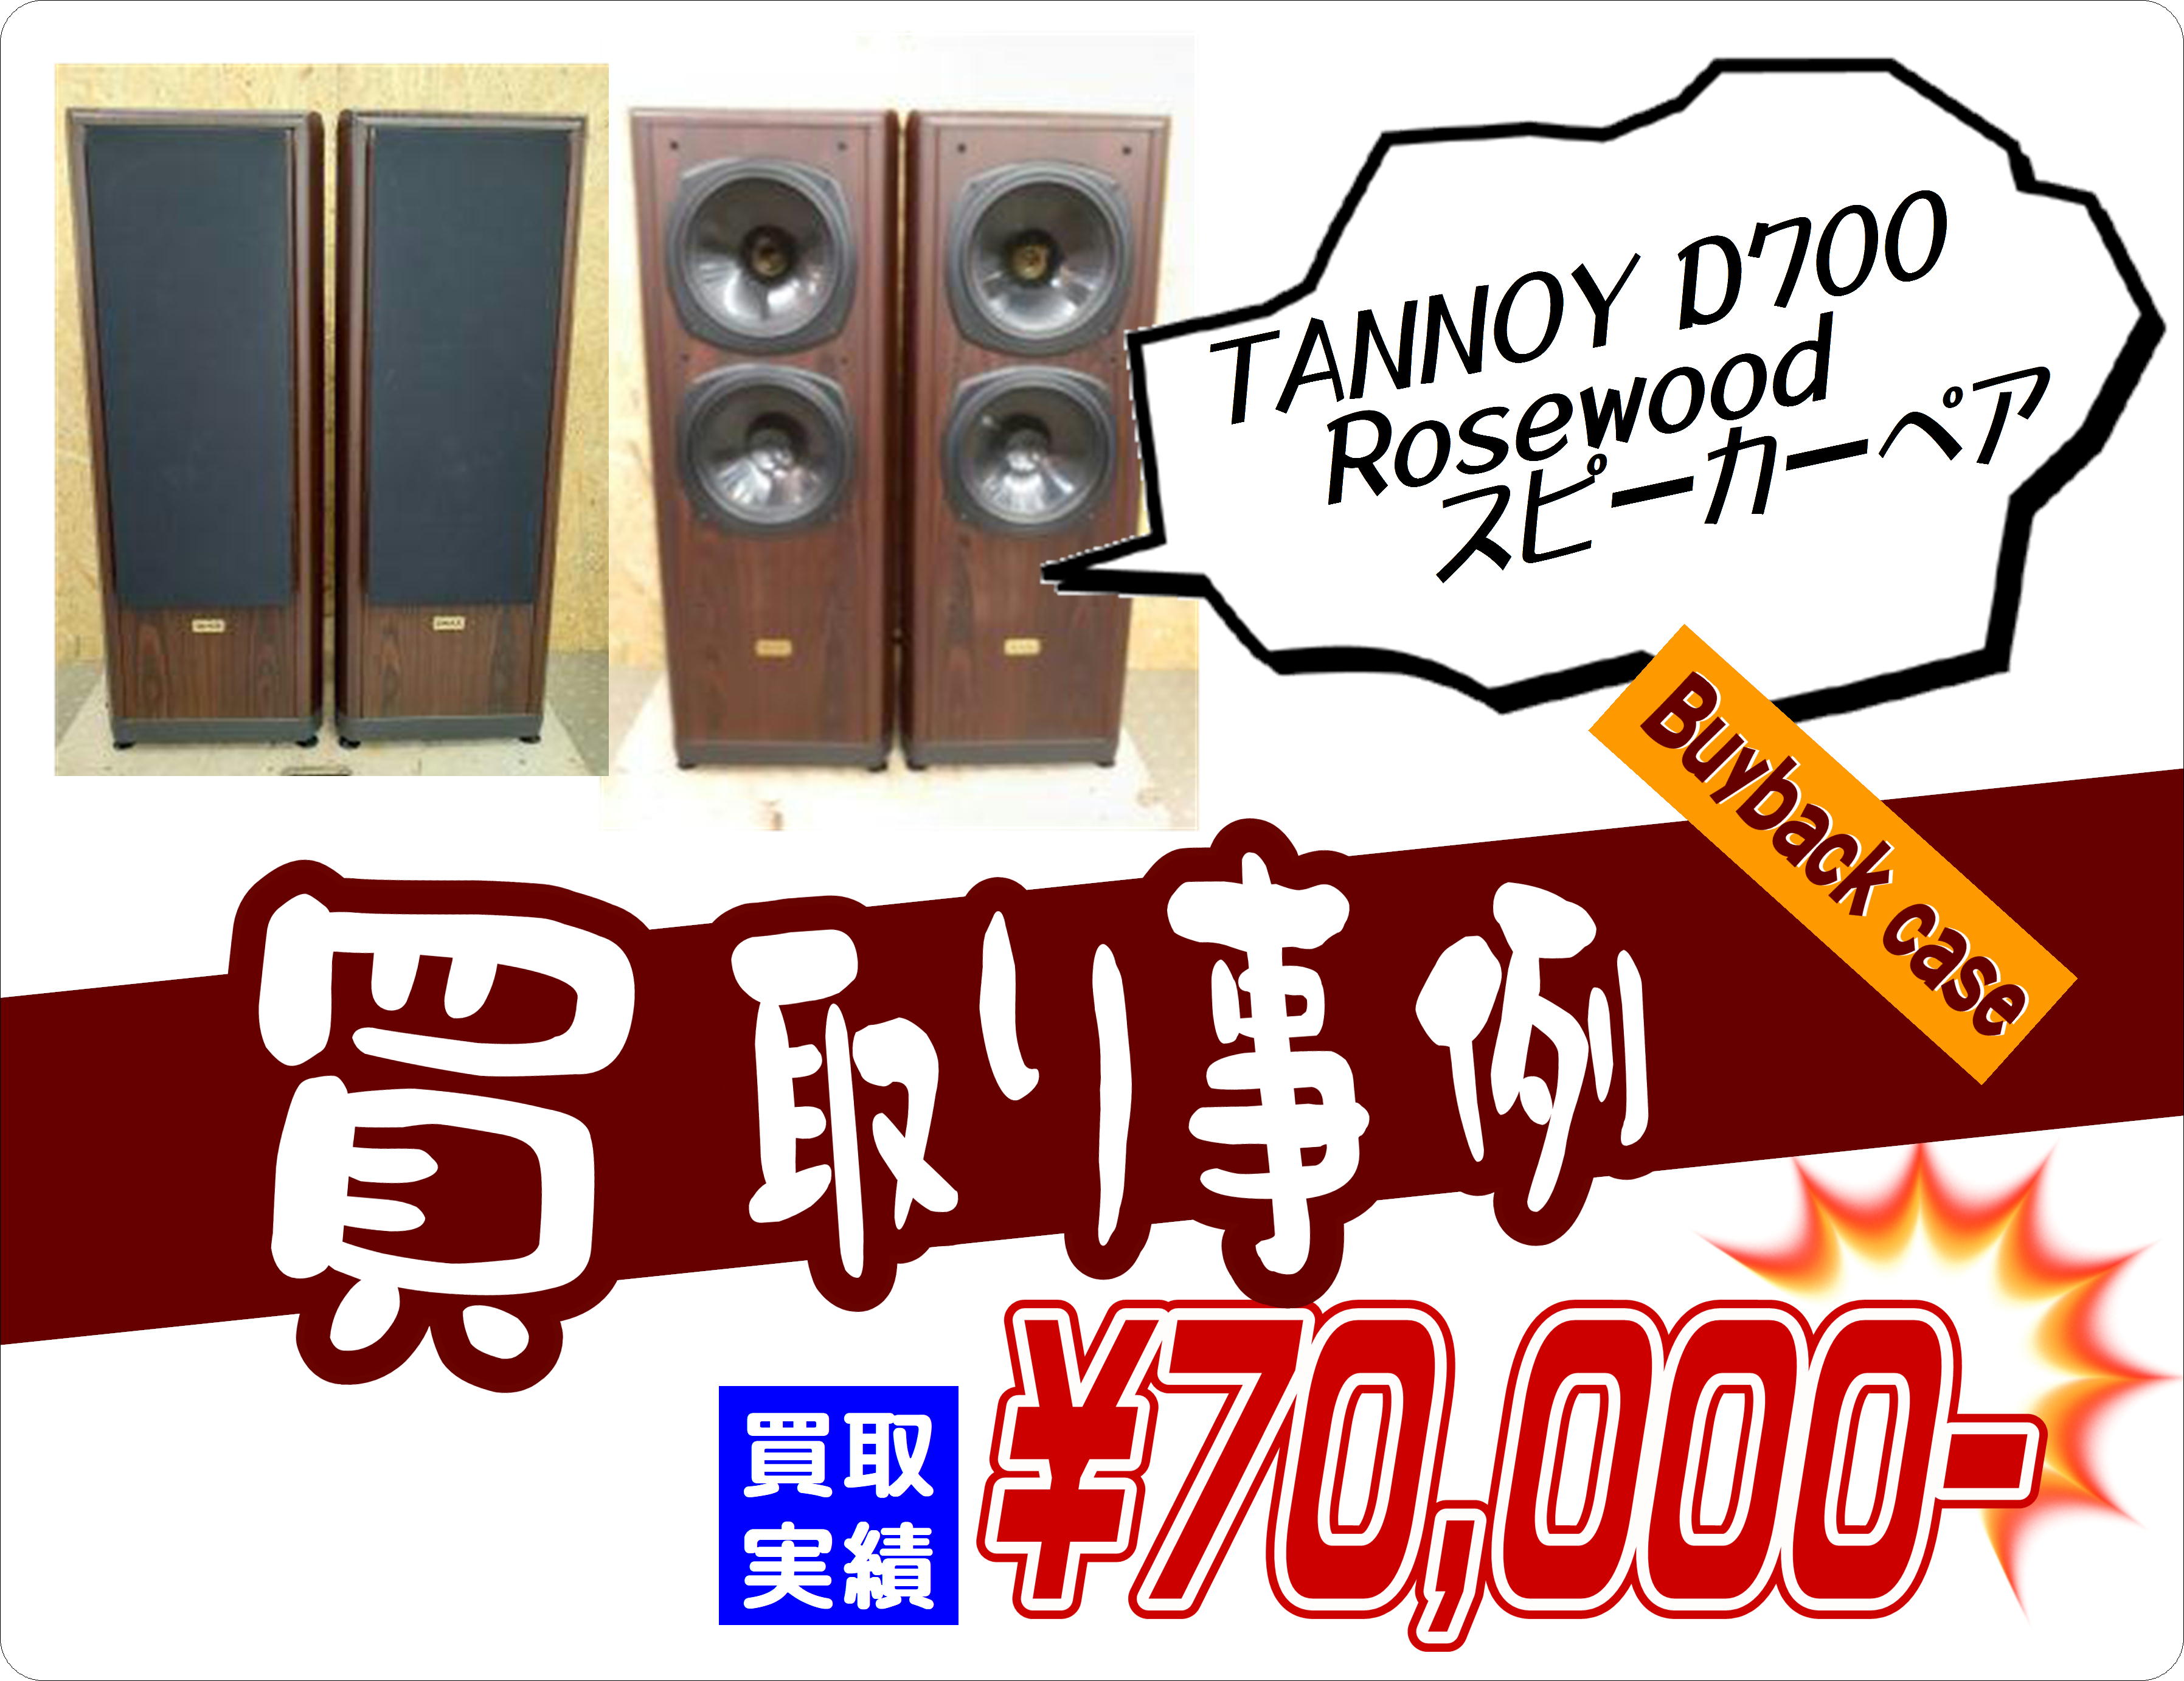 TANNOY D700 Rosewood スピーカーペア